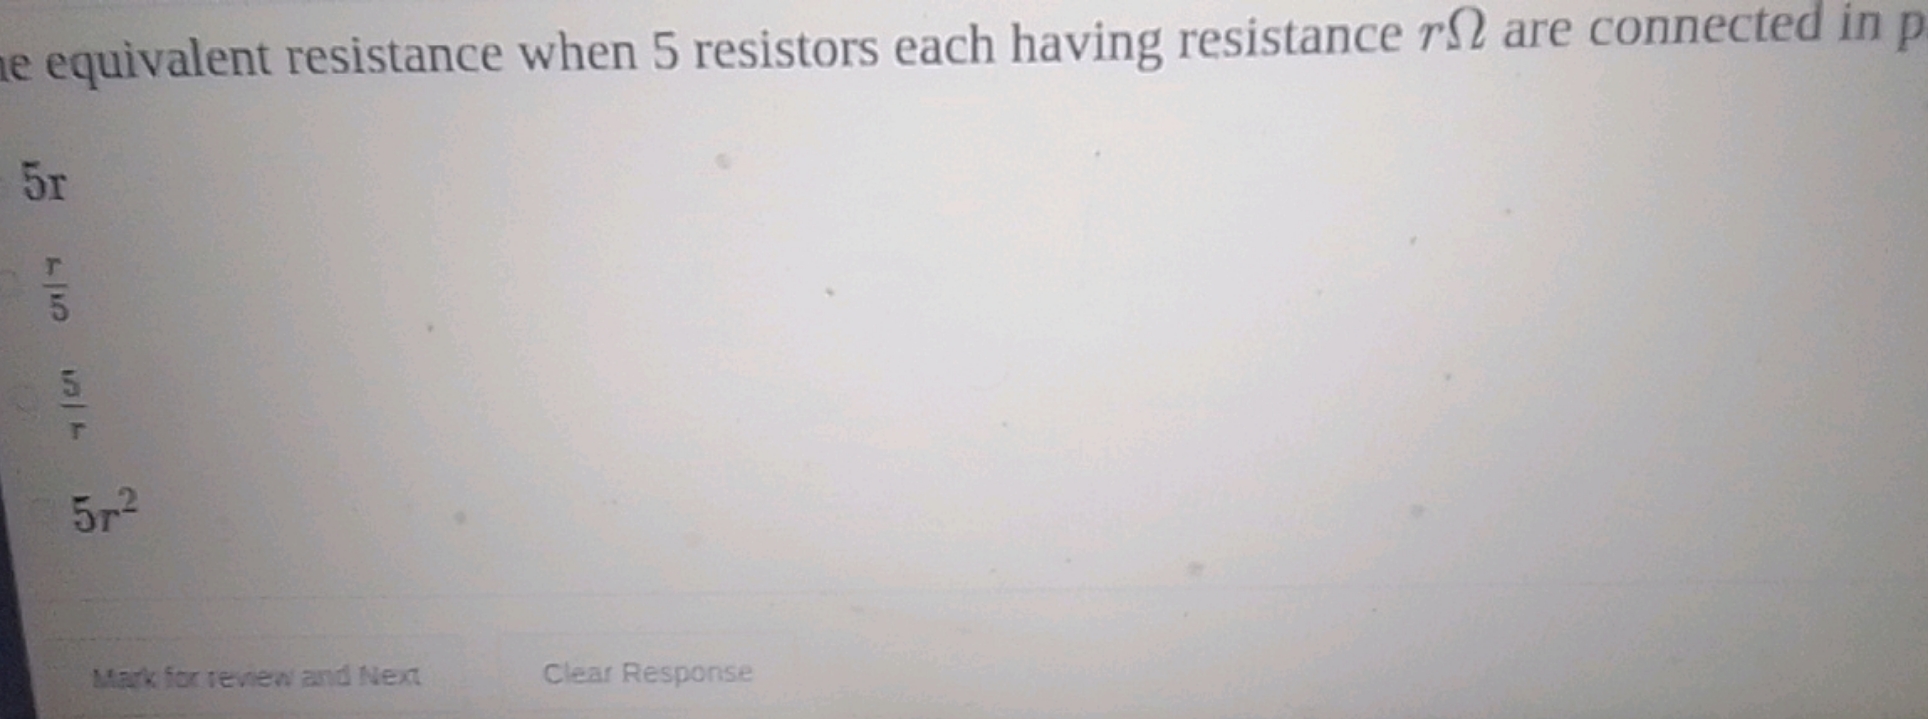 e equivalent resistance when 5 resistors each having resistance rΩ are